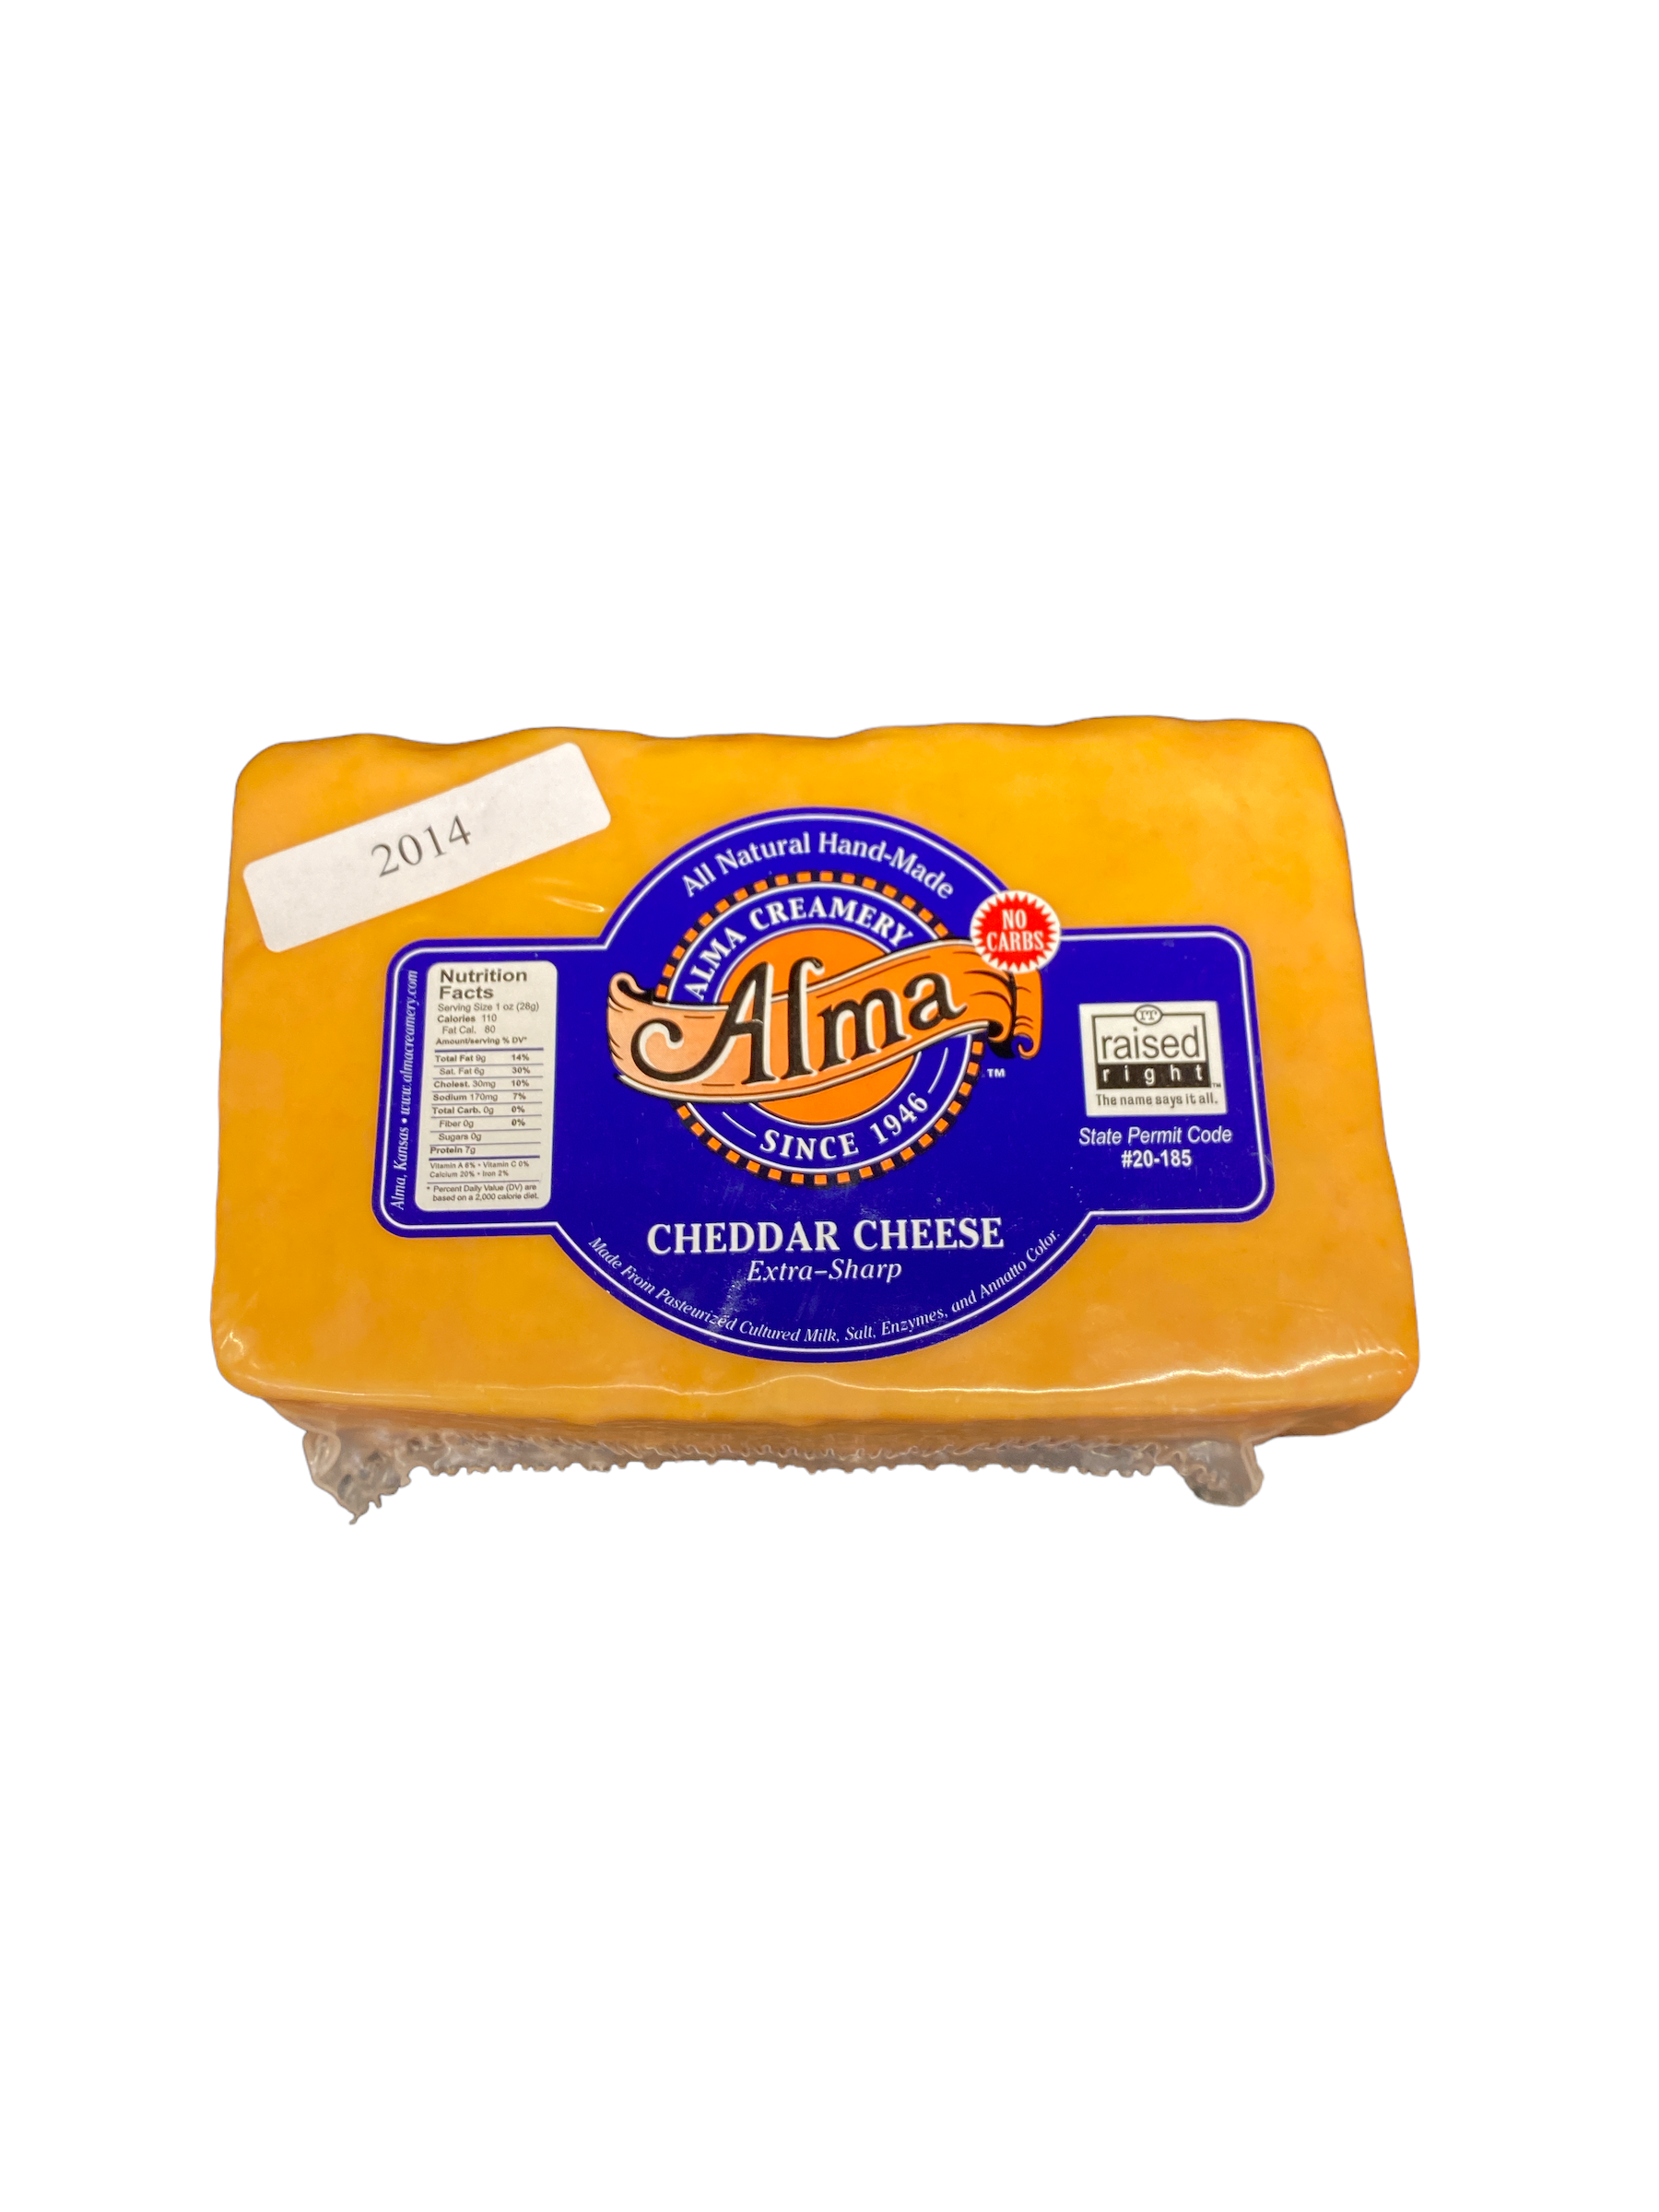 2014 Sharp Cheddar Cheese - 1 lb - Alma Creamery